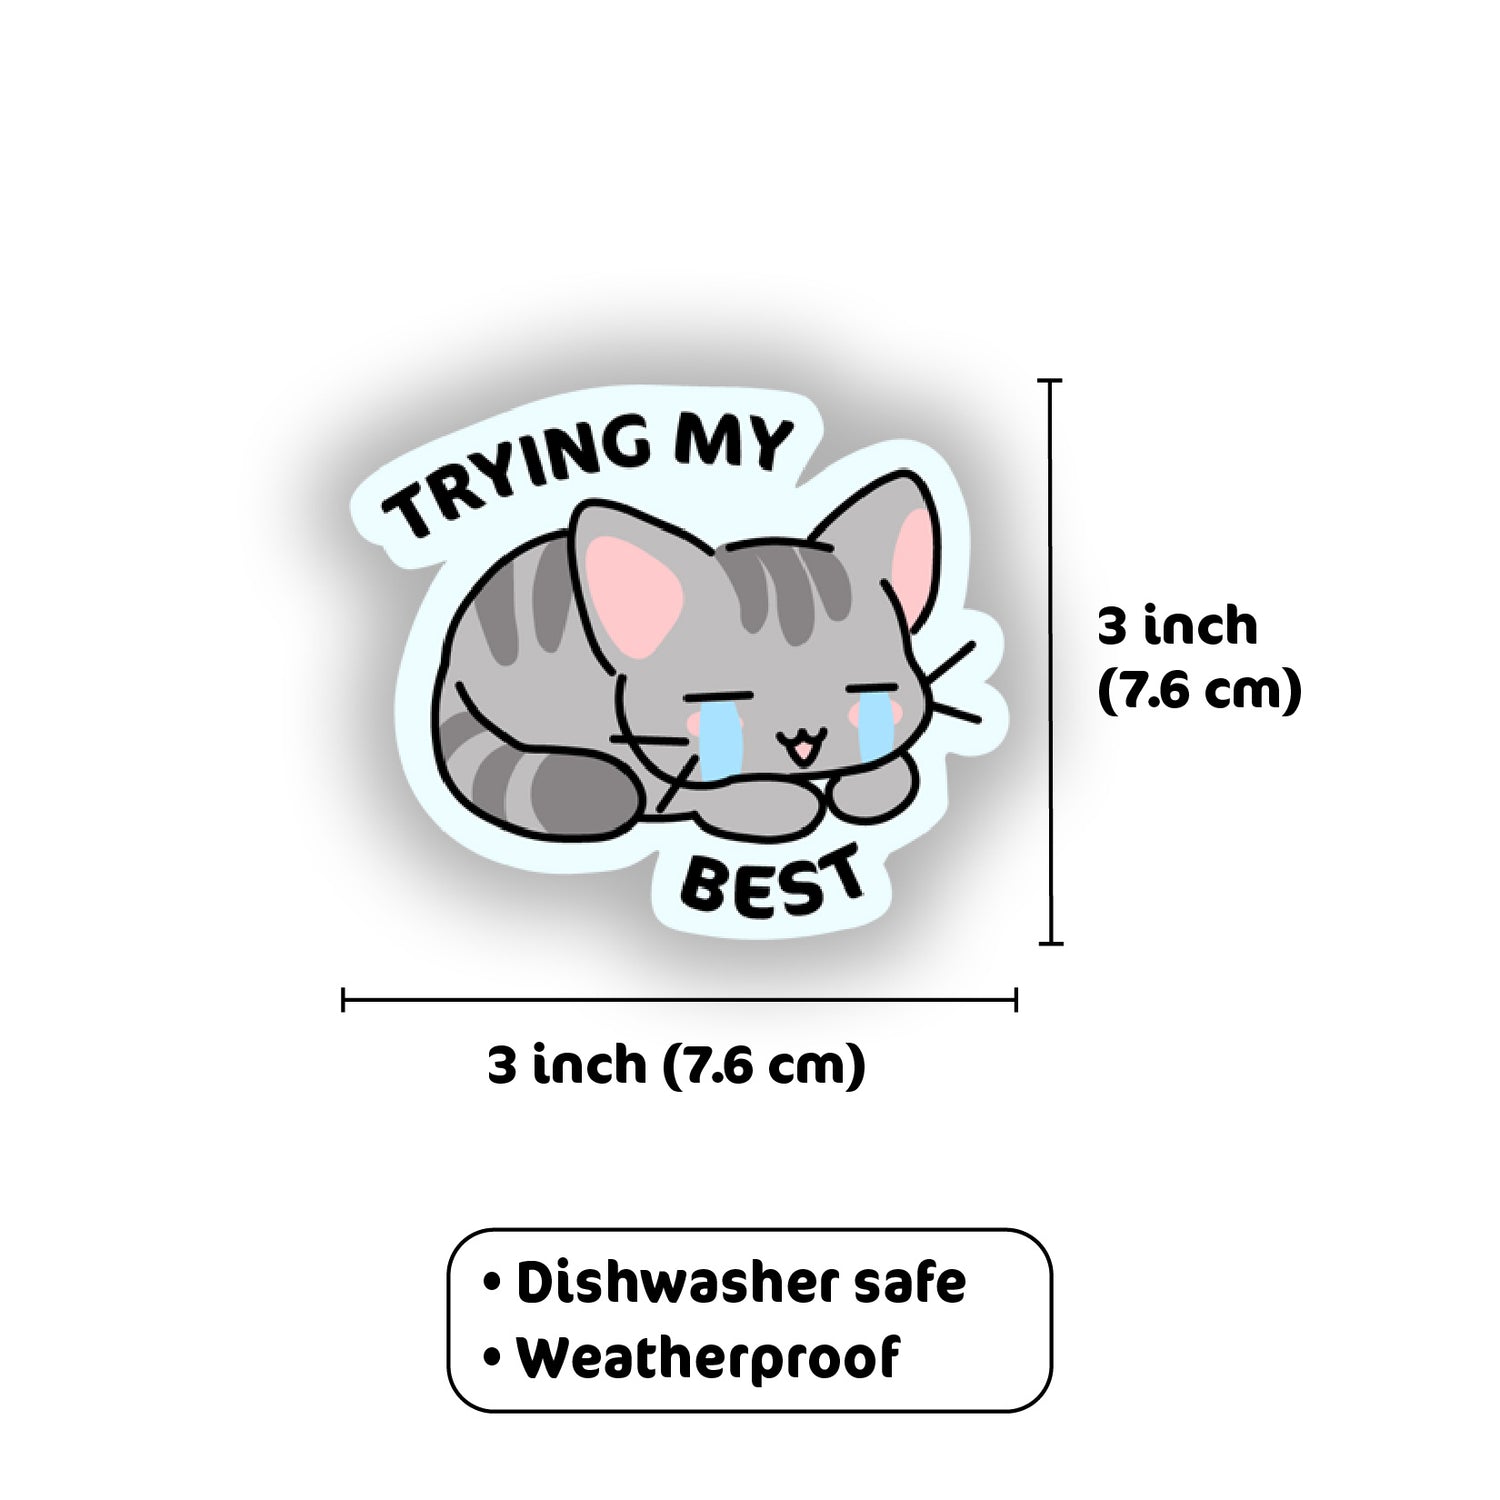 Please Do Not the Cat Vinyl Sticker – Kittie Treats Shop